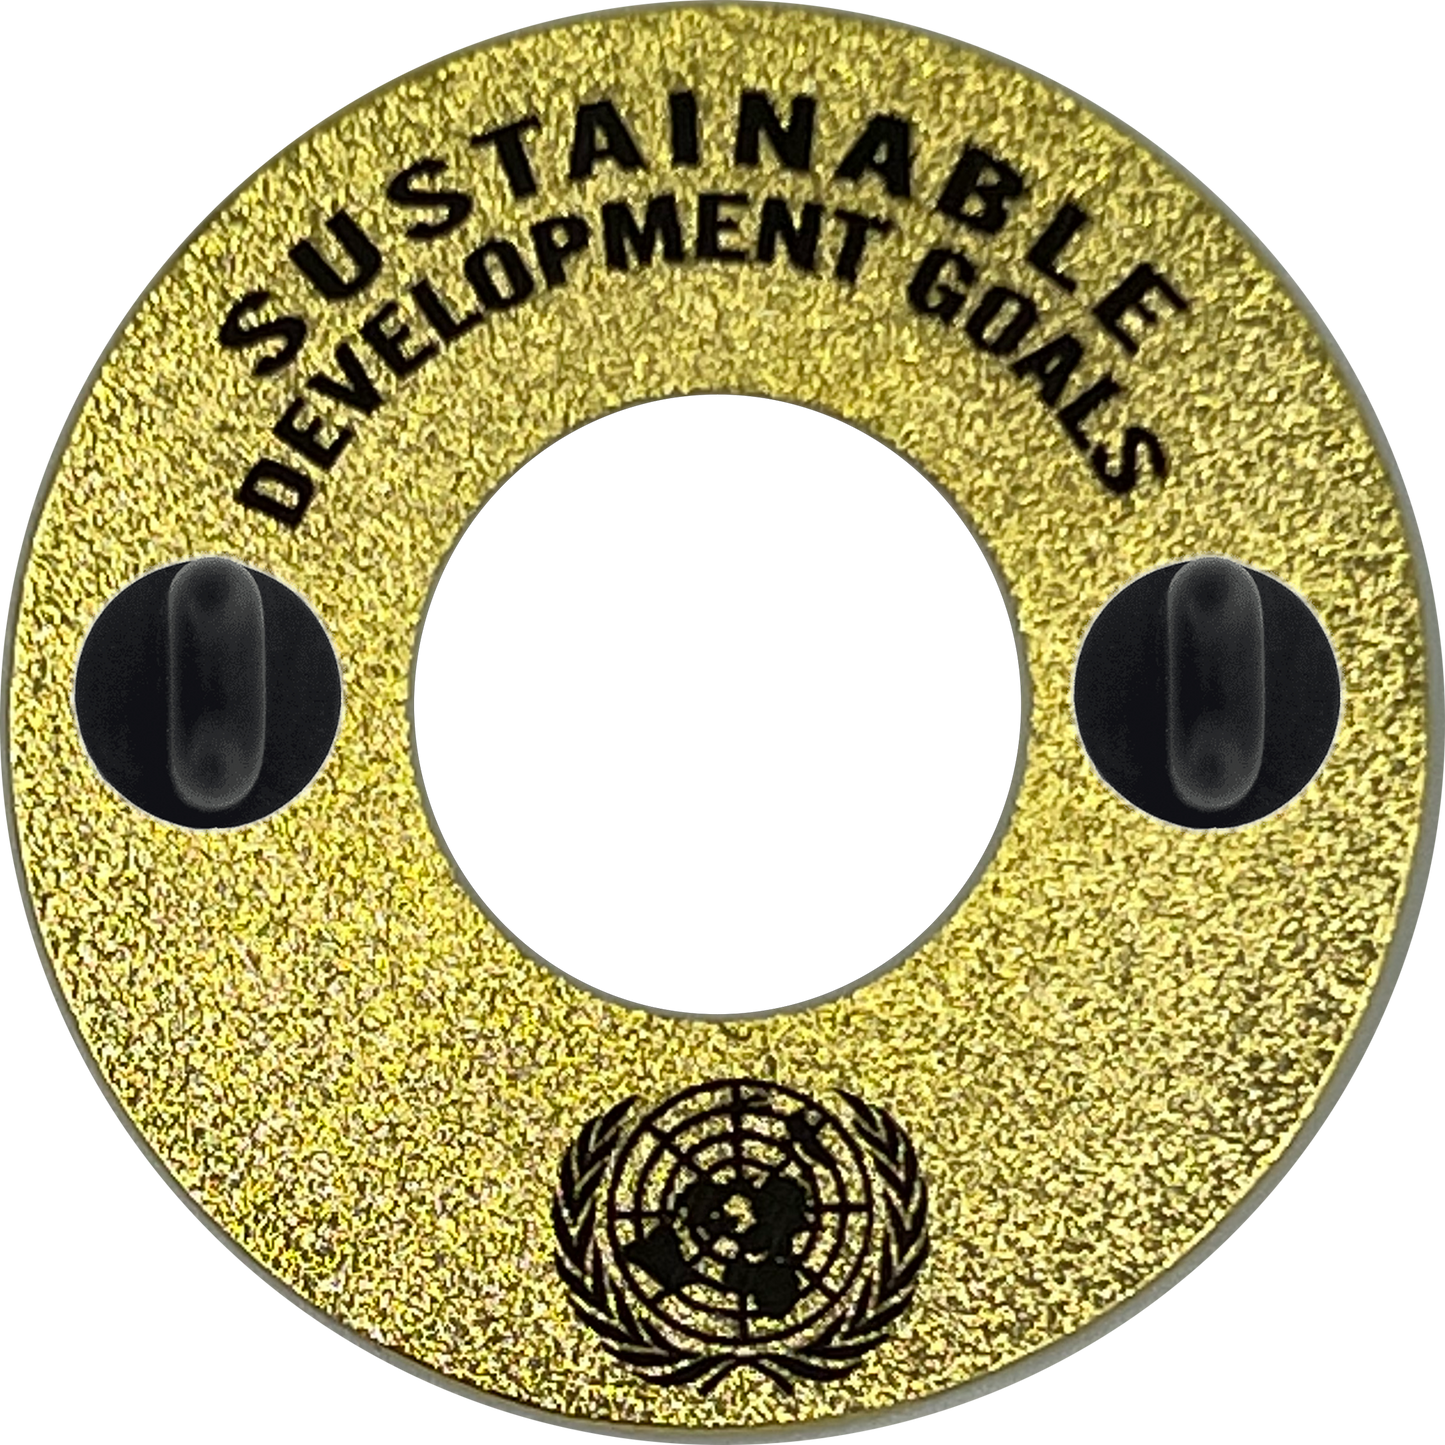 GL3-004 UN 17 Sustainable Development Goals United Nation not NATO Global Goals Lapel Pin Blueprint for Peace